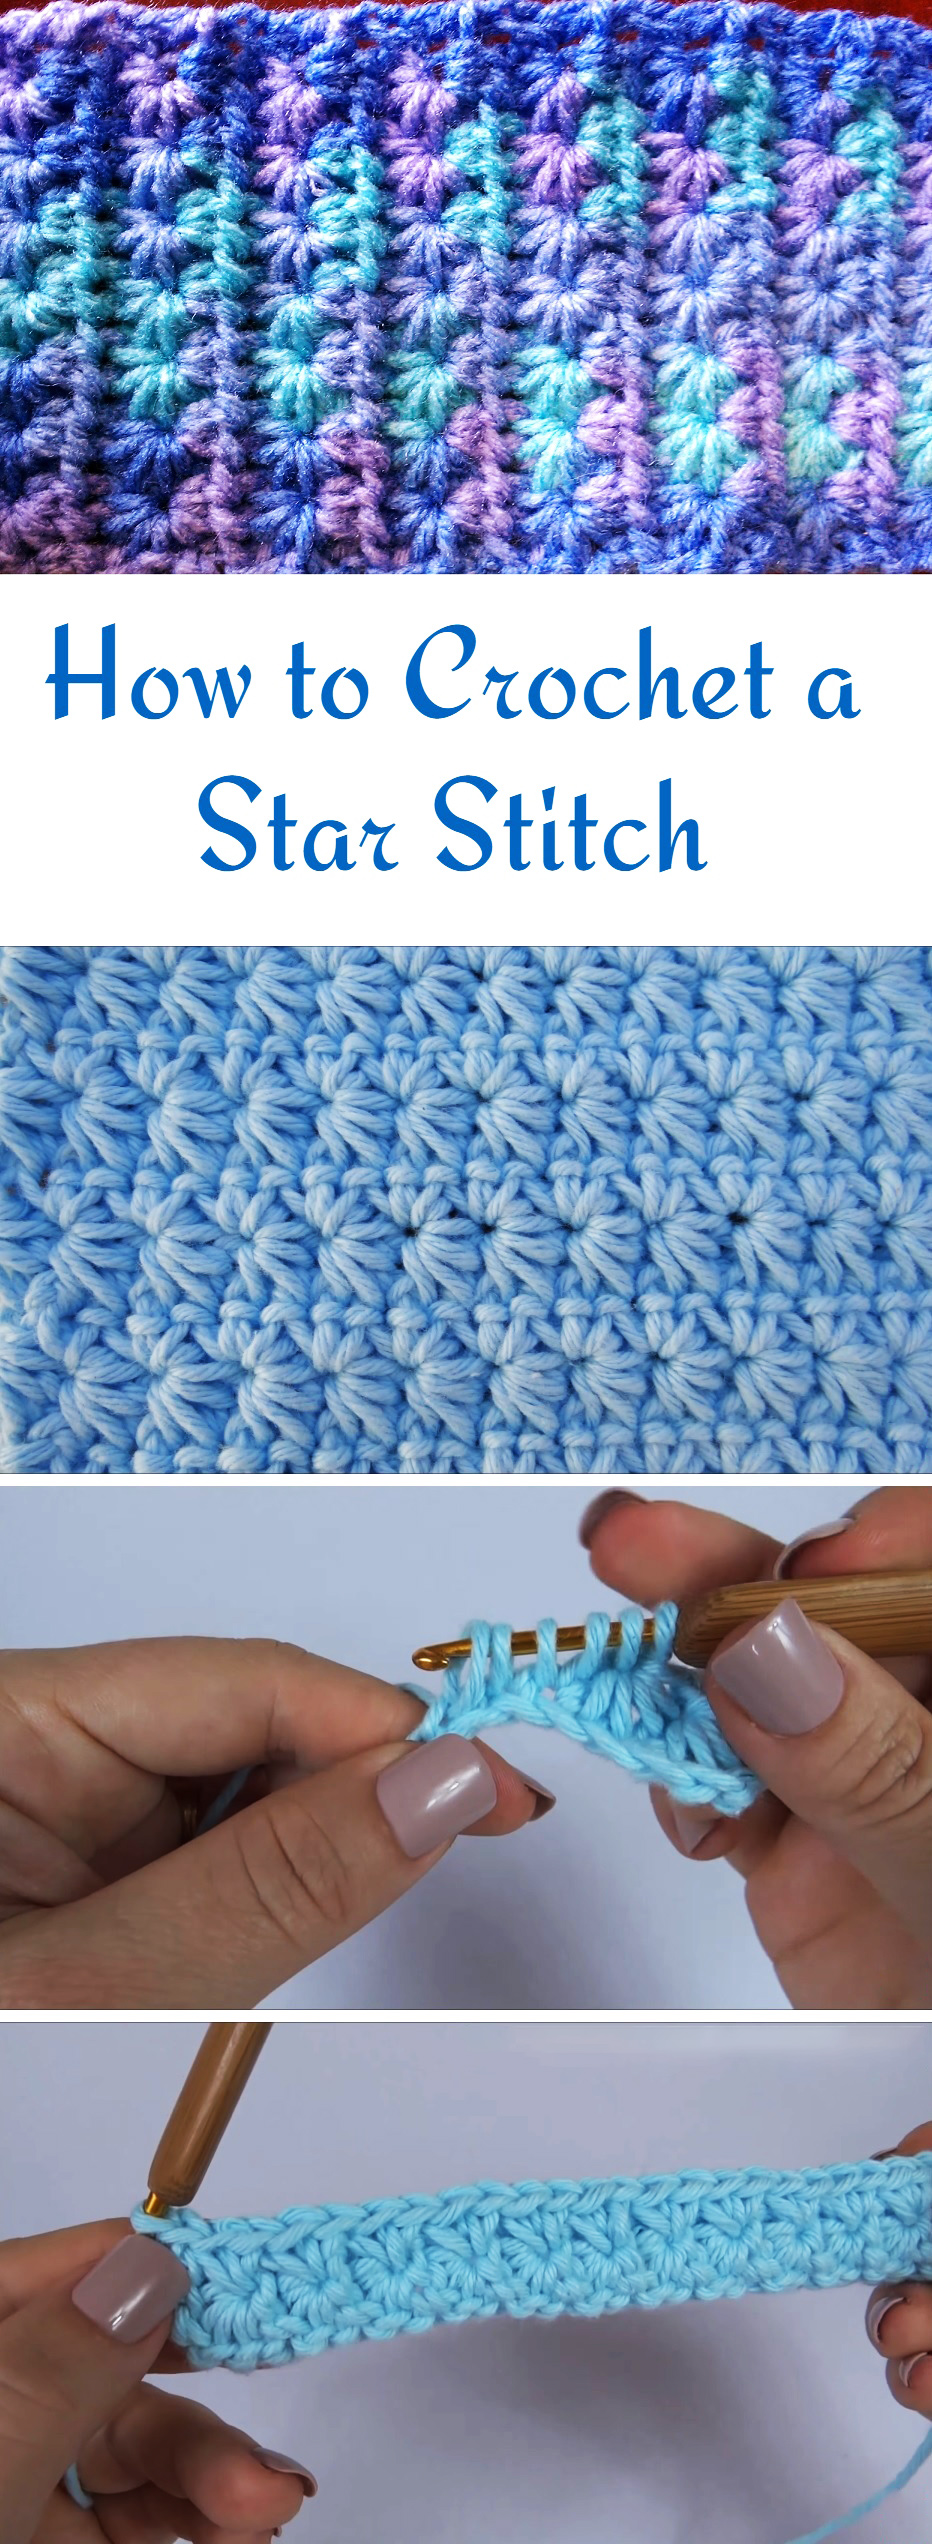 How to Crochet a Star Stitch